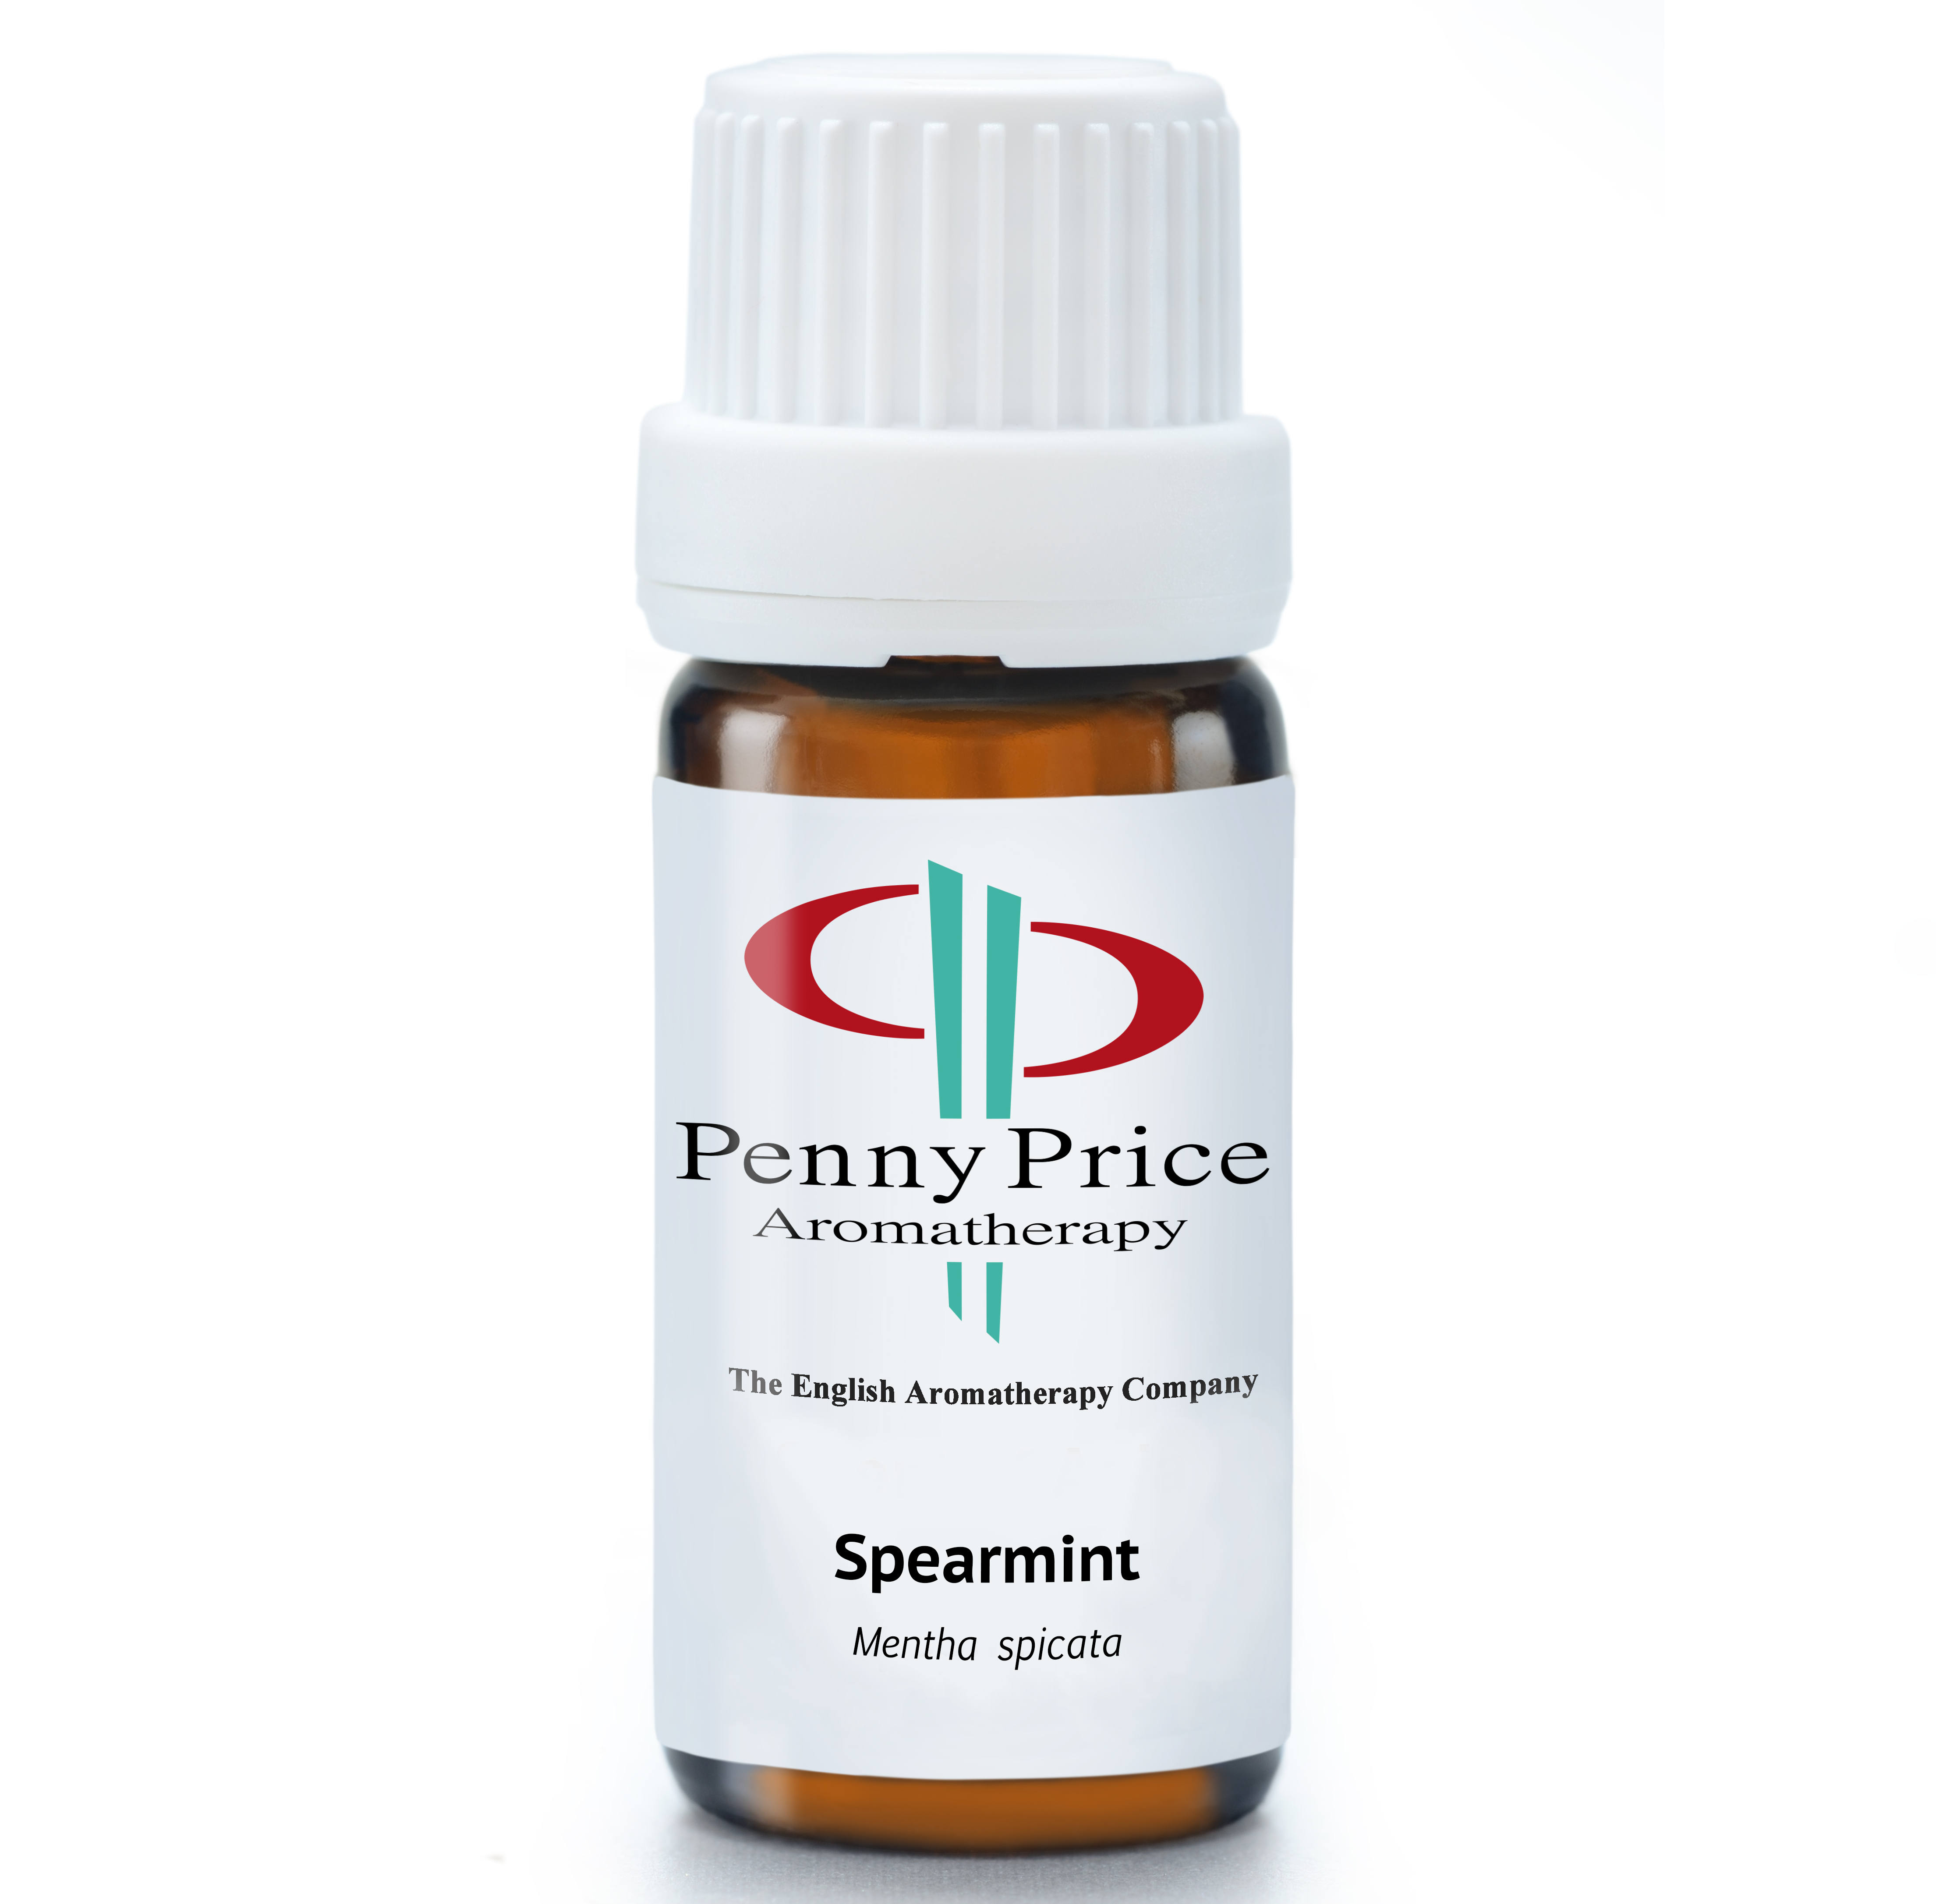 #Spearmint essential oil